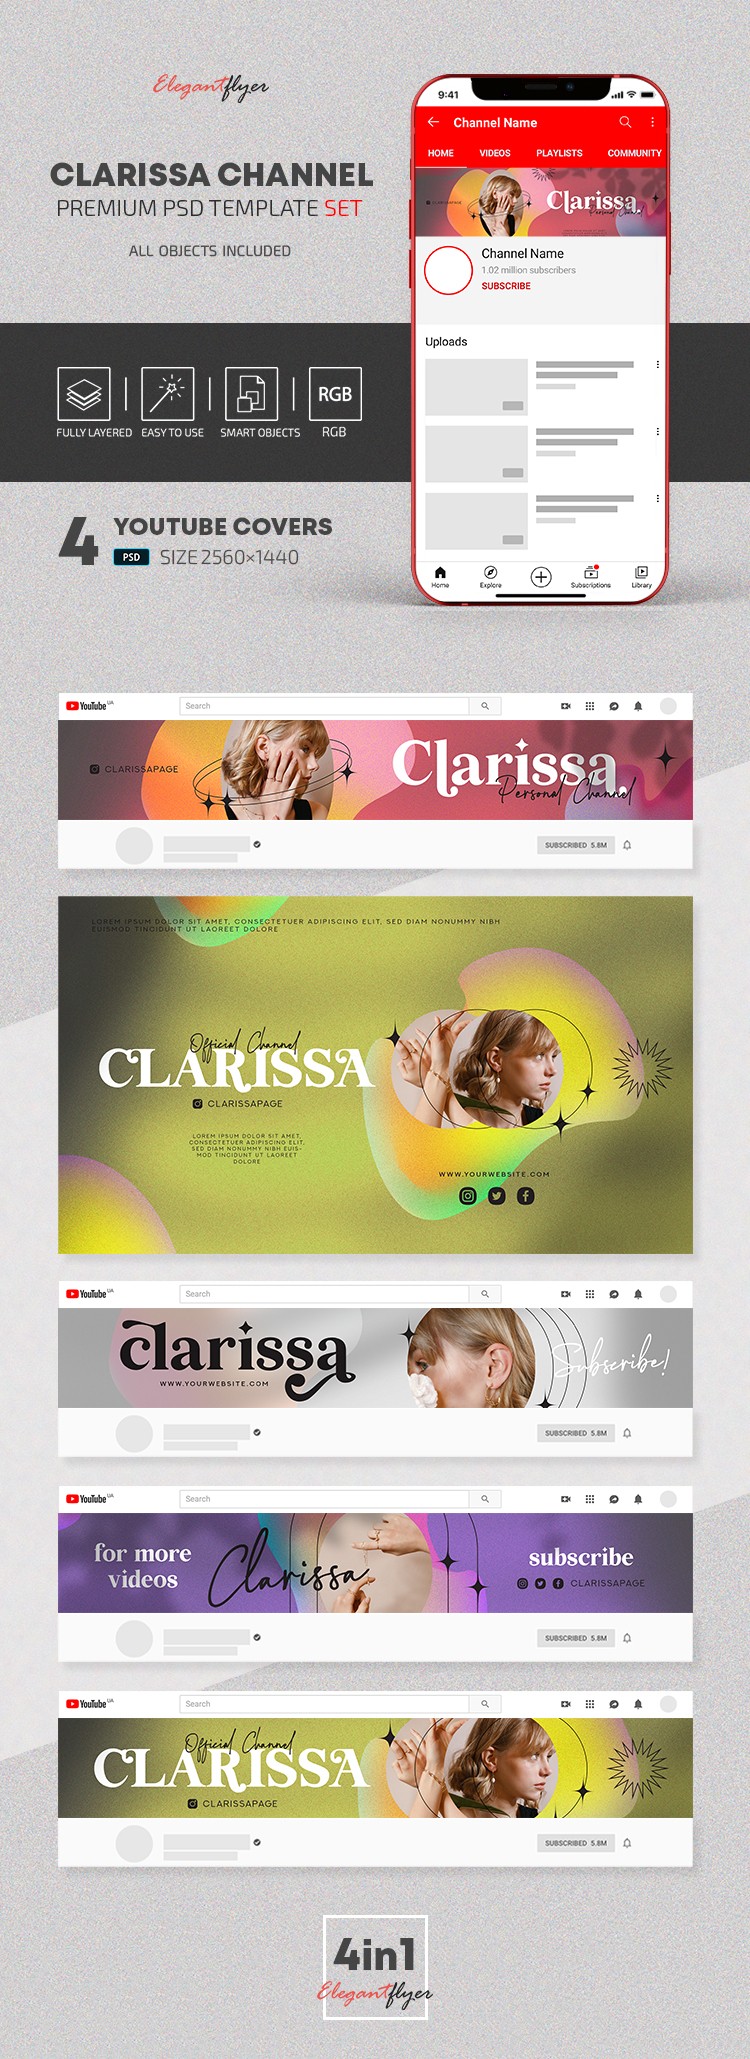 Canal de Clarissa en YouTube. by ElegantFlyer